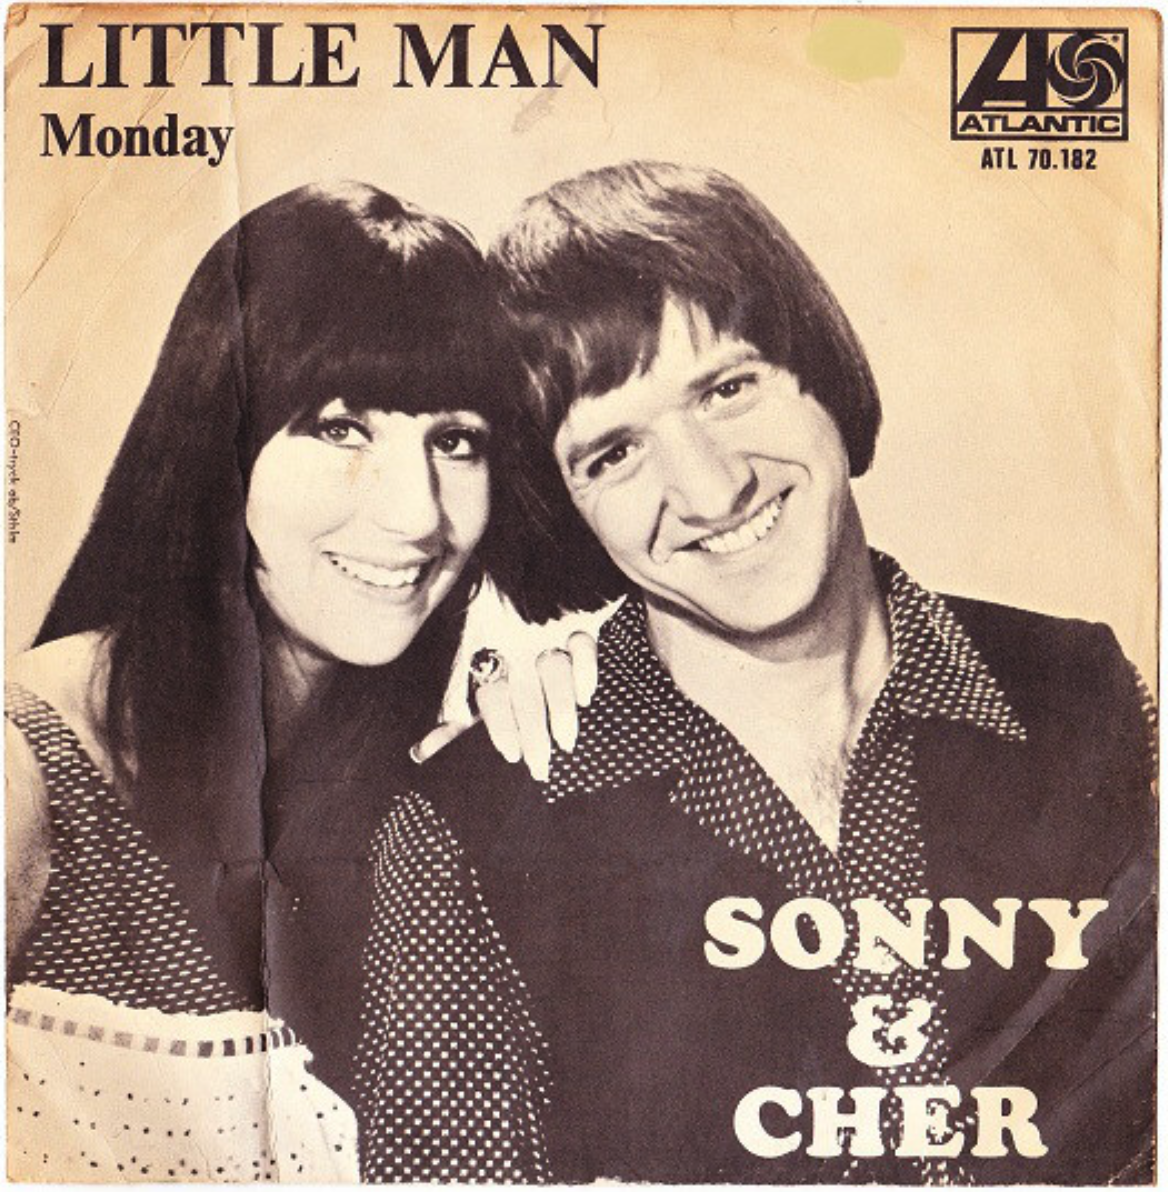 Шер little man. Sonny - cher - little man 1966г. "Сонни и Шер" ("Sonny & cher"). Cher little man 1966. Sonny cher 1966 года little man.